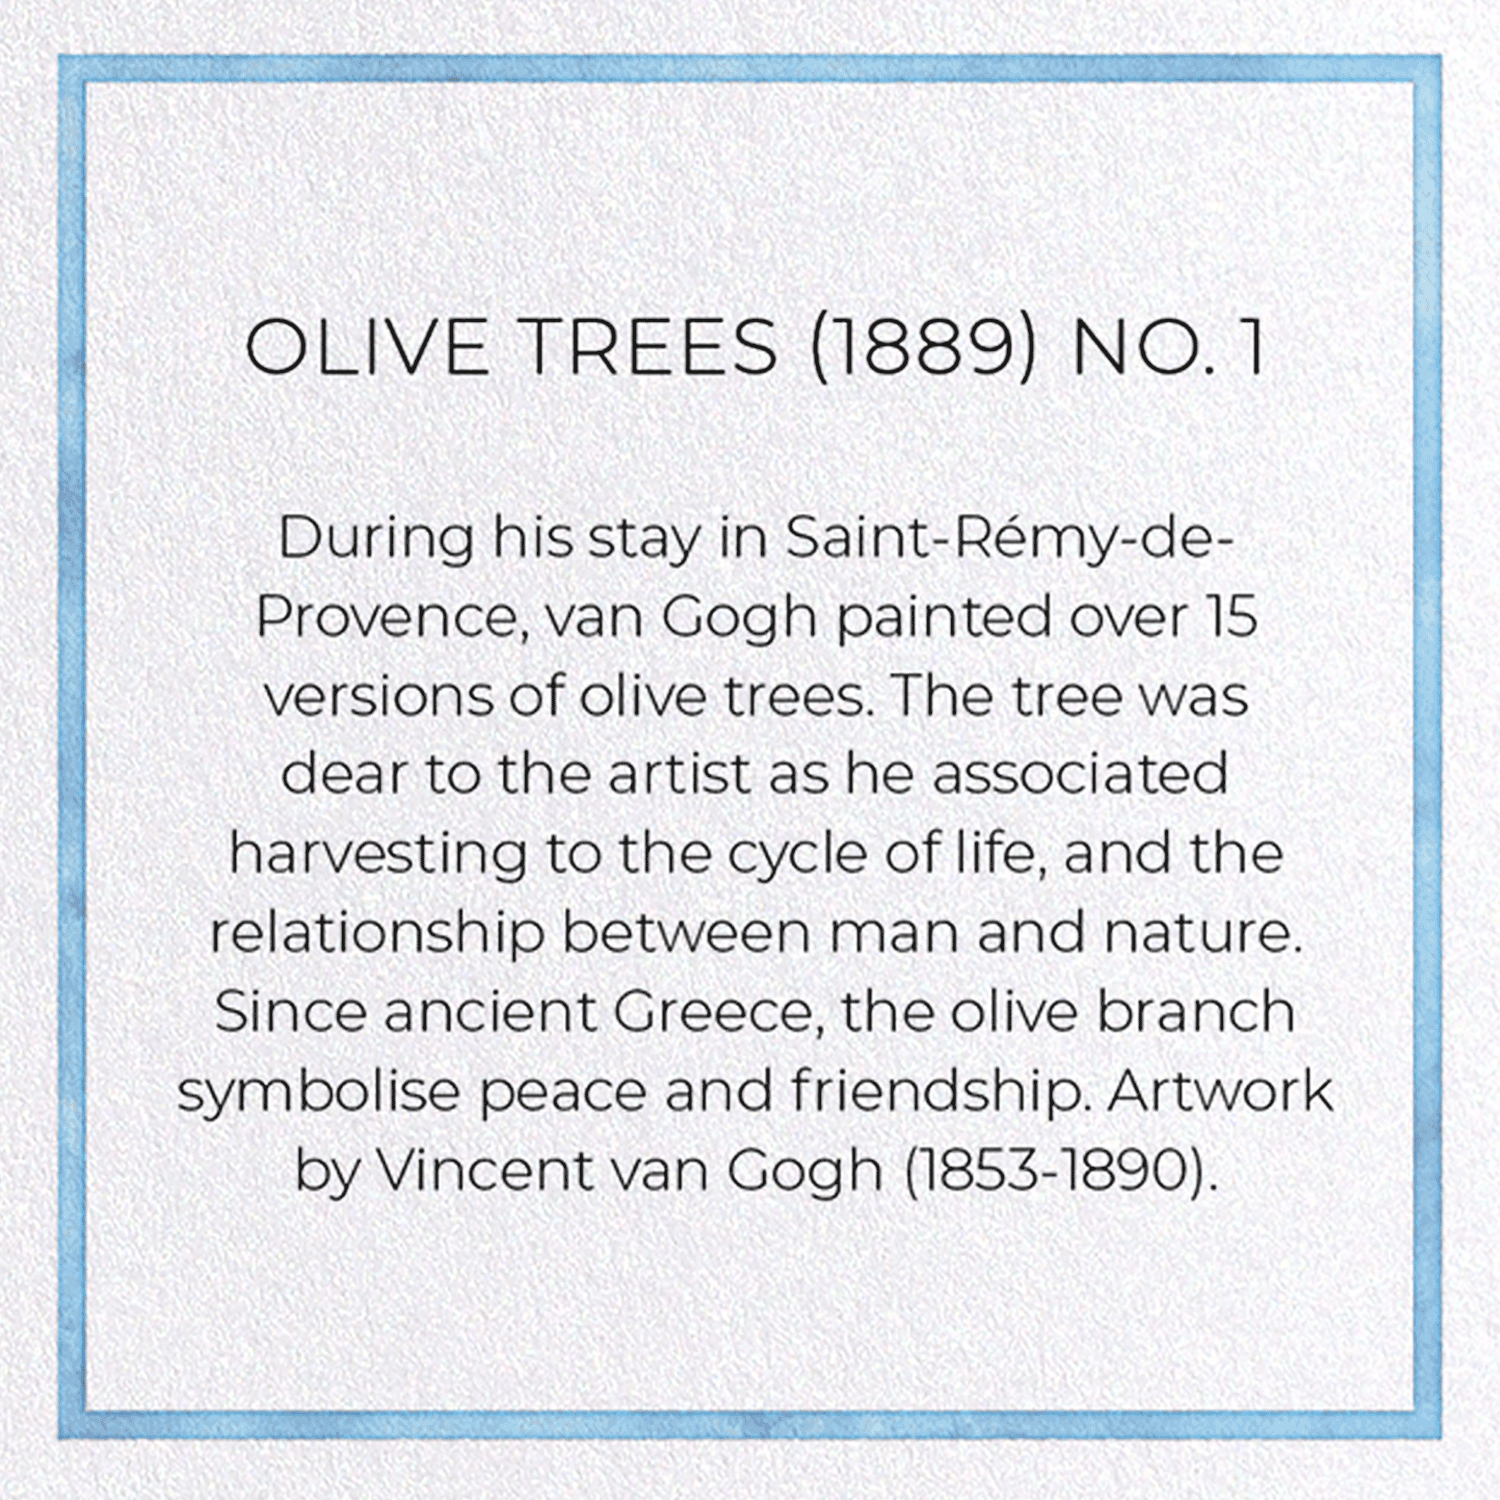 OLIVE TREES (1889) NO. 1